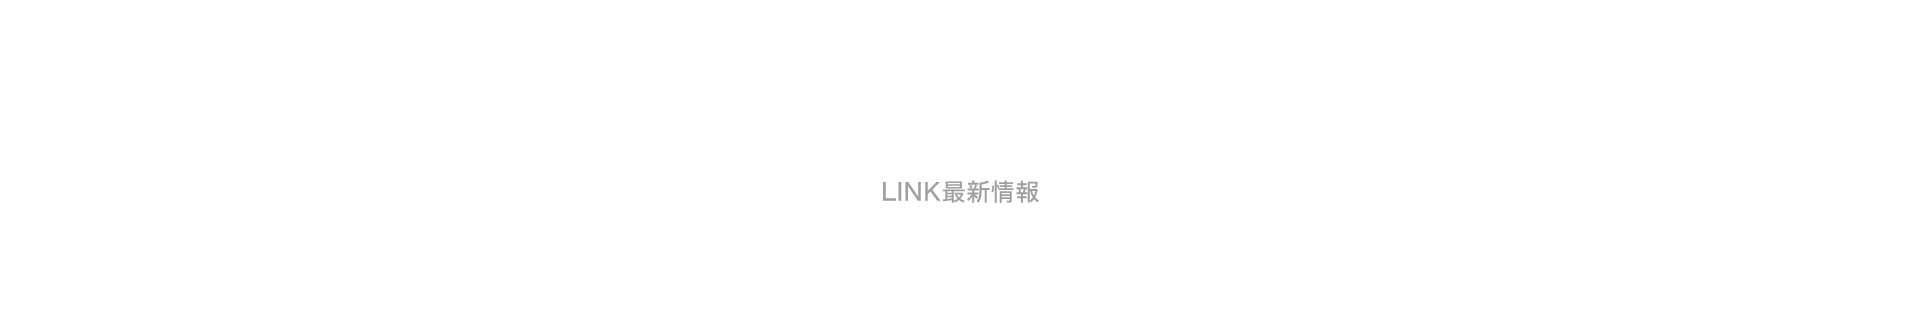 LINK NEWS｜LINK 最新情報